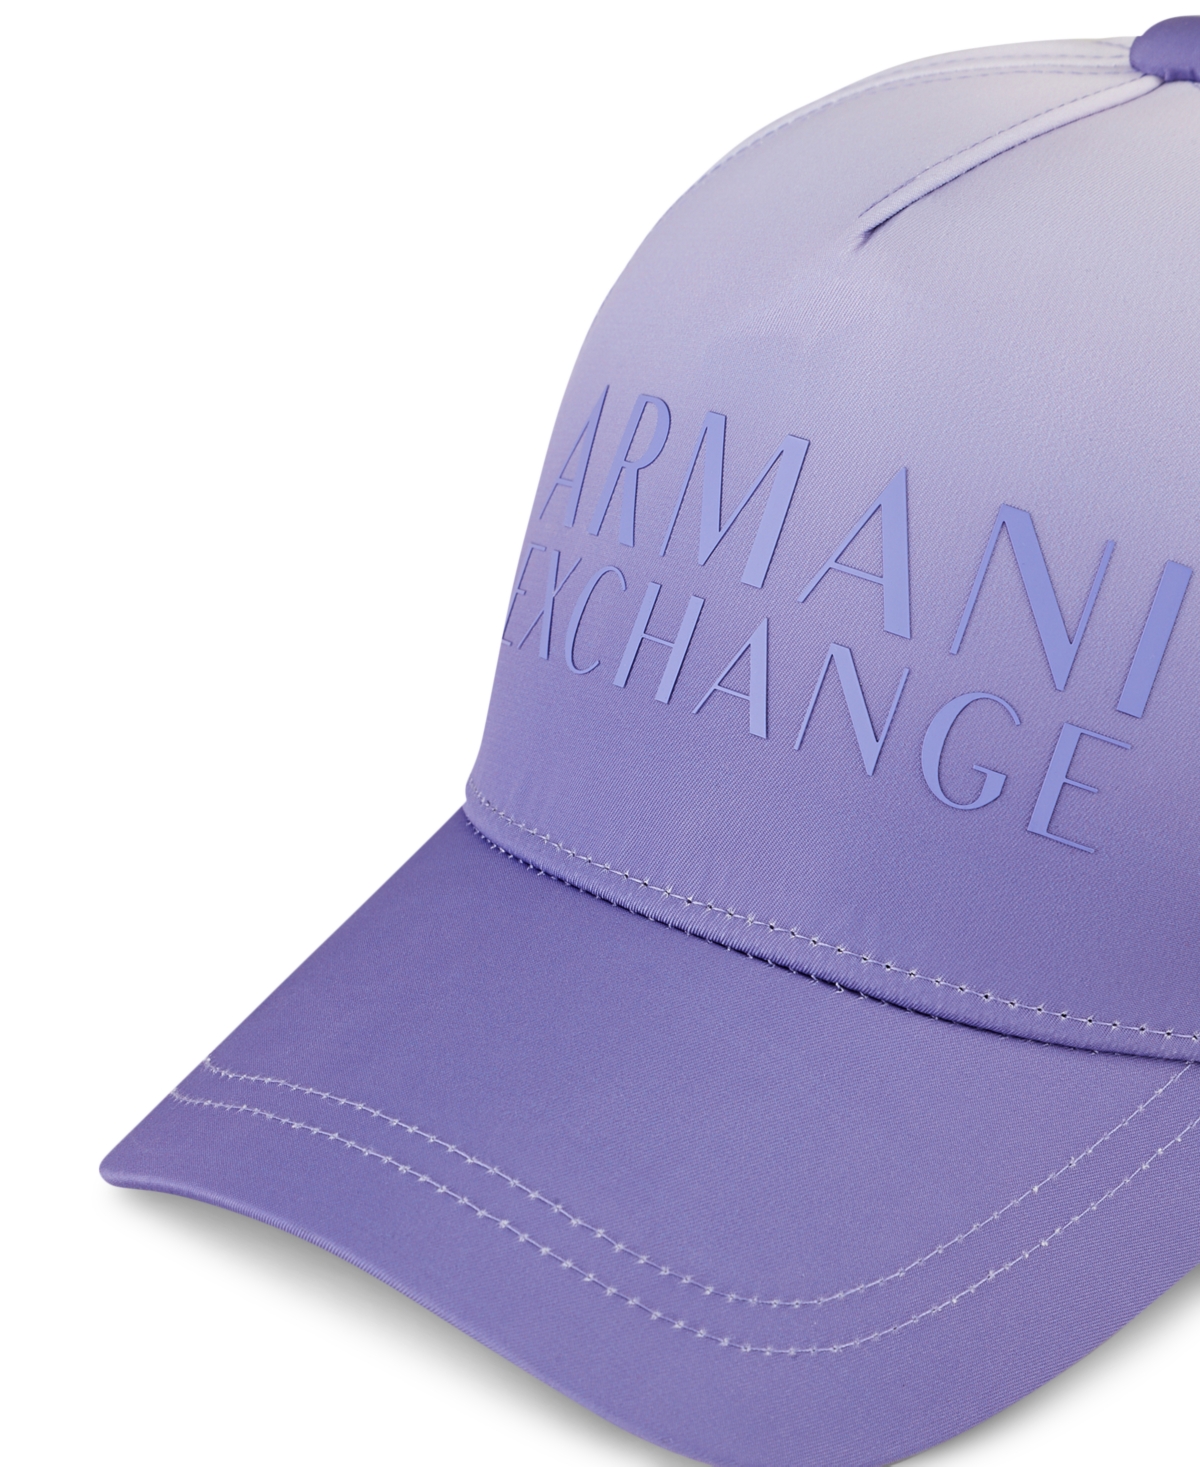 AX Armani Exchange Mens Baseball Hat